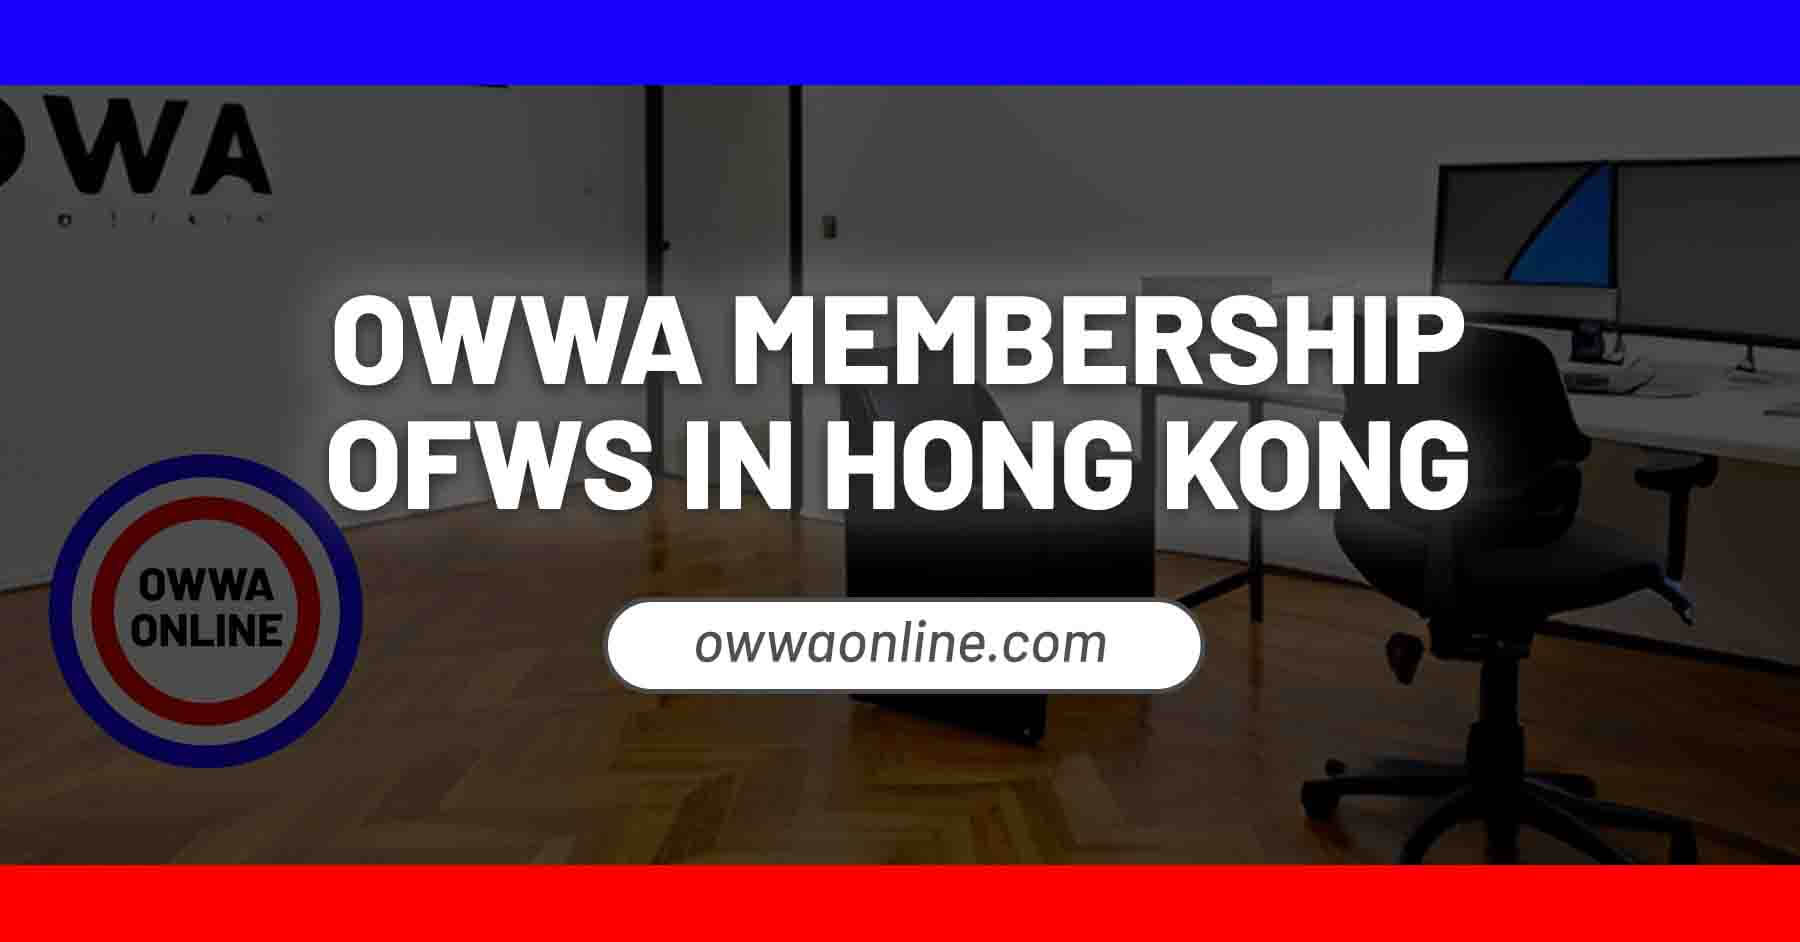 owwa membership application appointment in hong kong